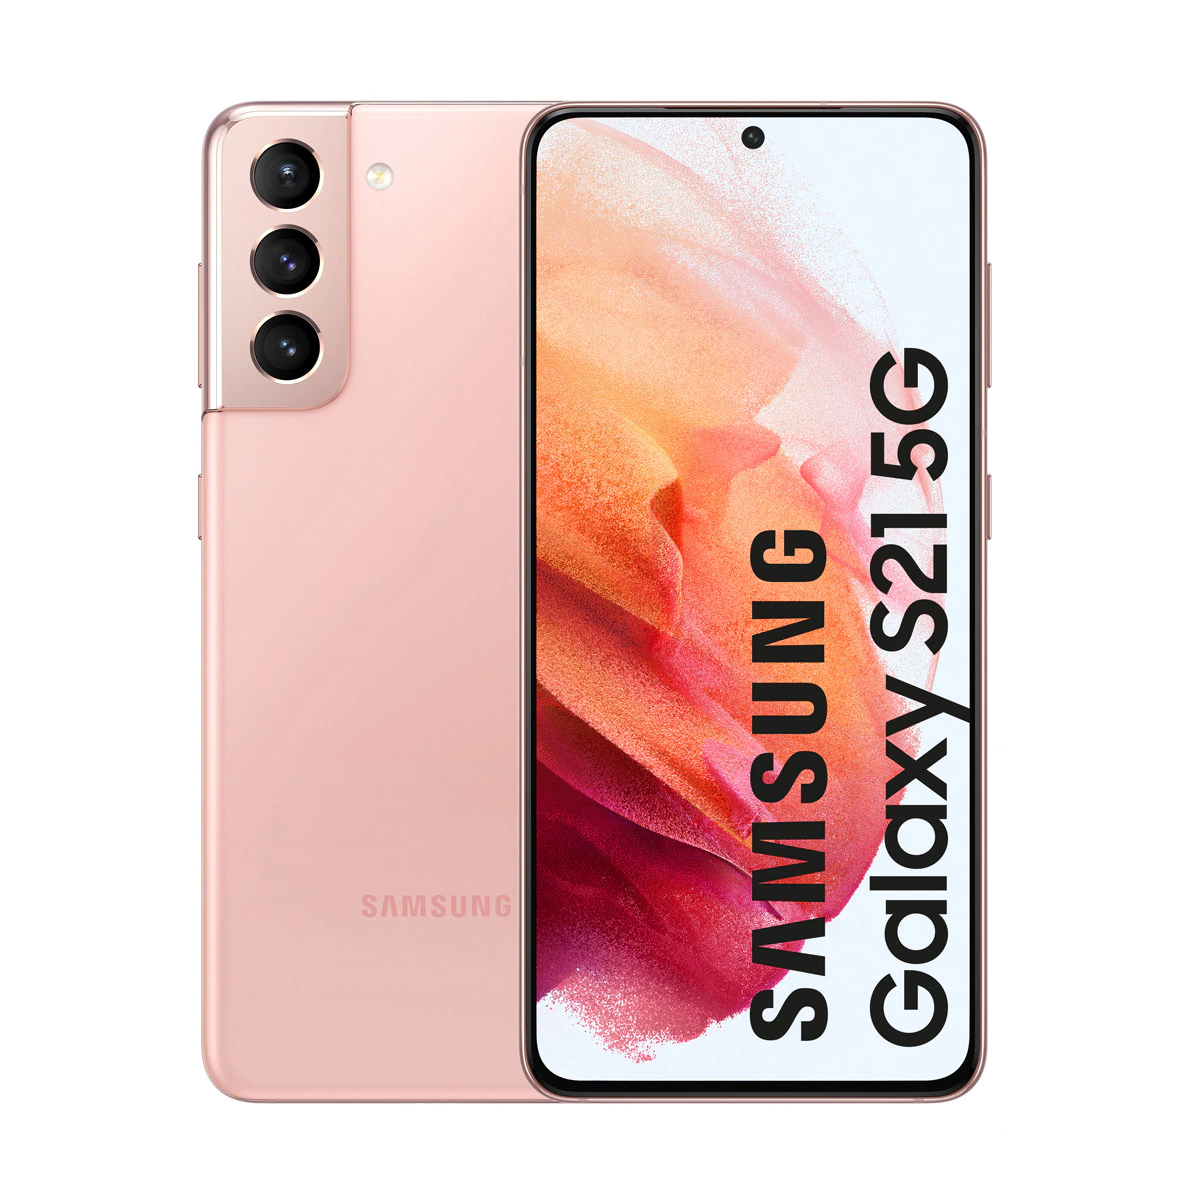 Samsung Galaxy S21 5G 8 GB + 128 GB rosa móvil libre